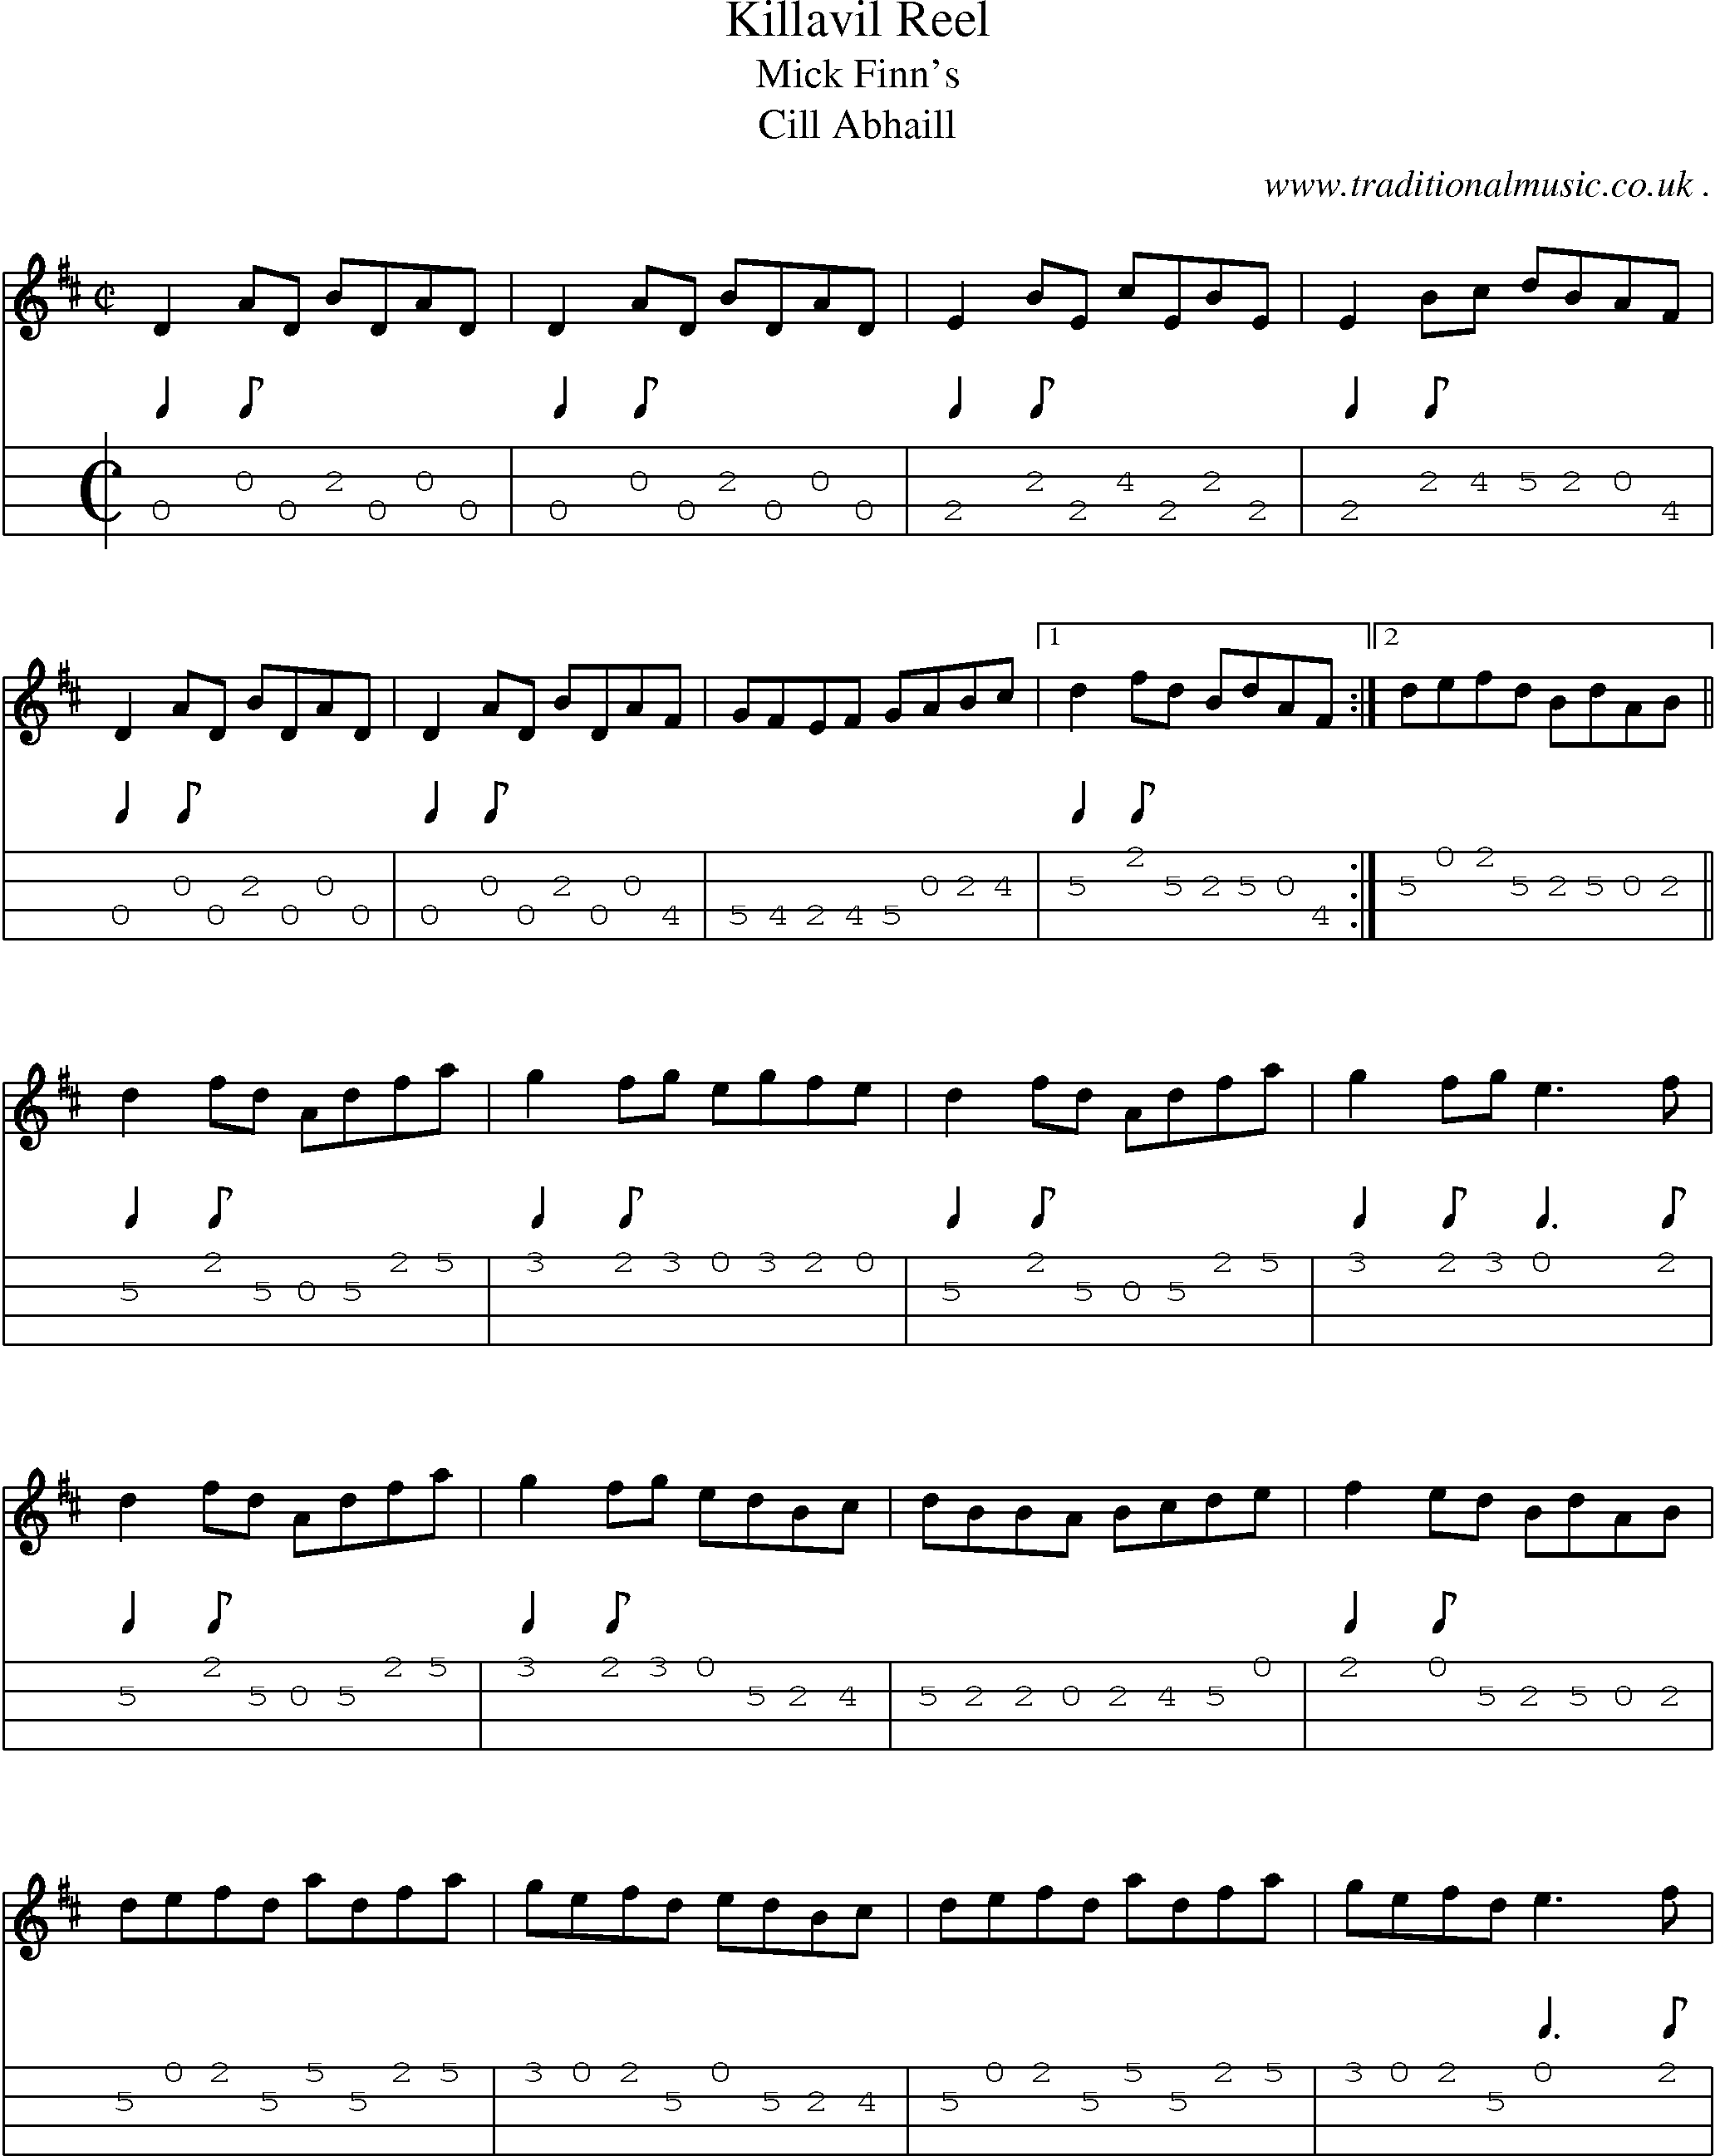 Sheet-Music and Mandolin Tabs for Killavil Reel